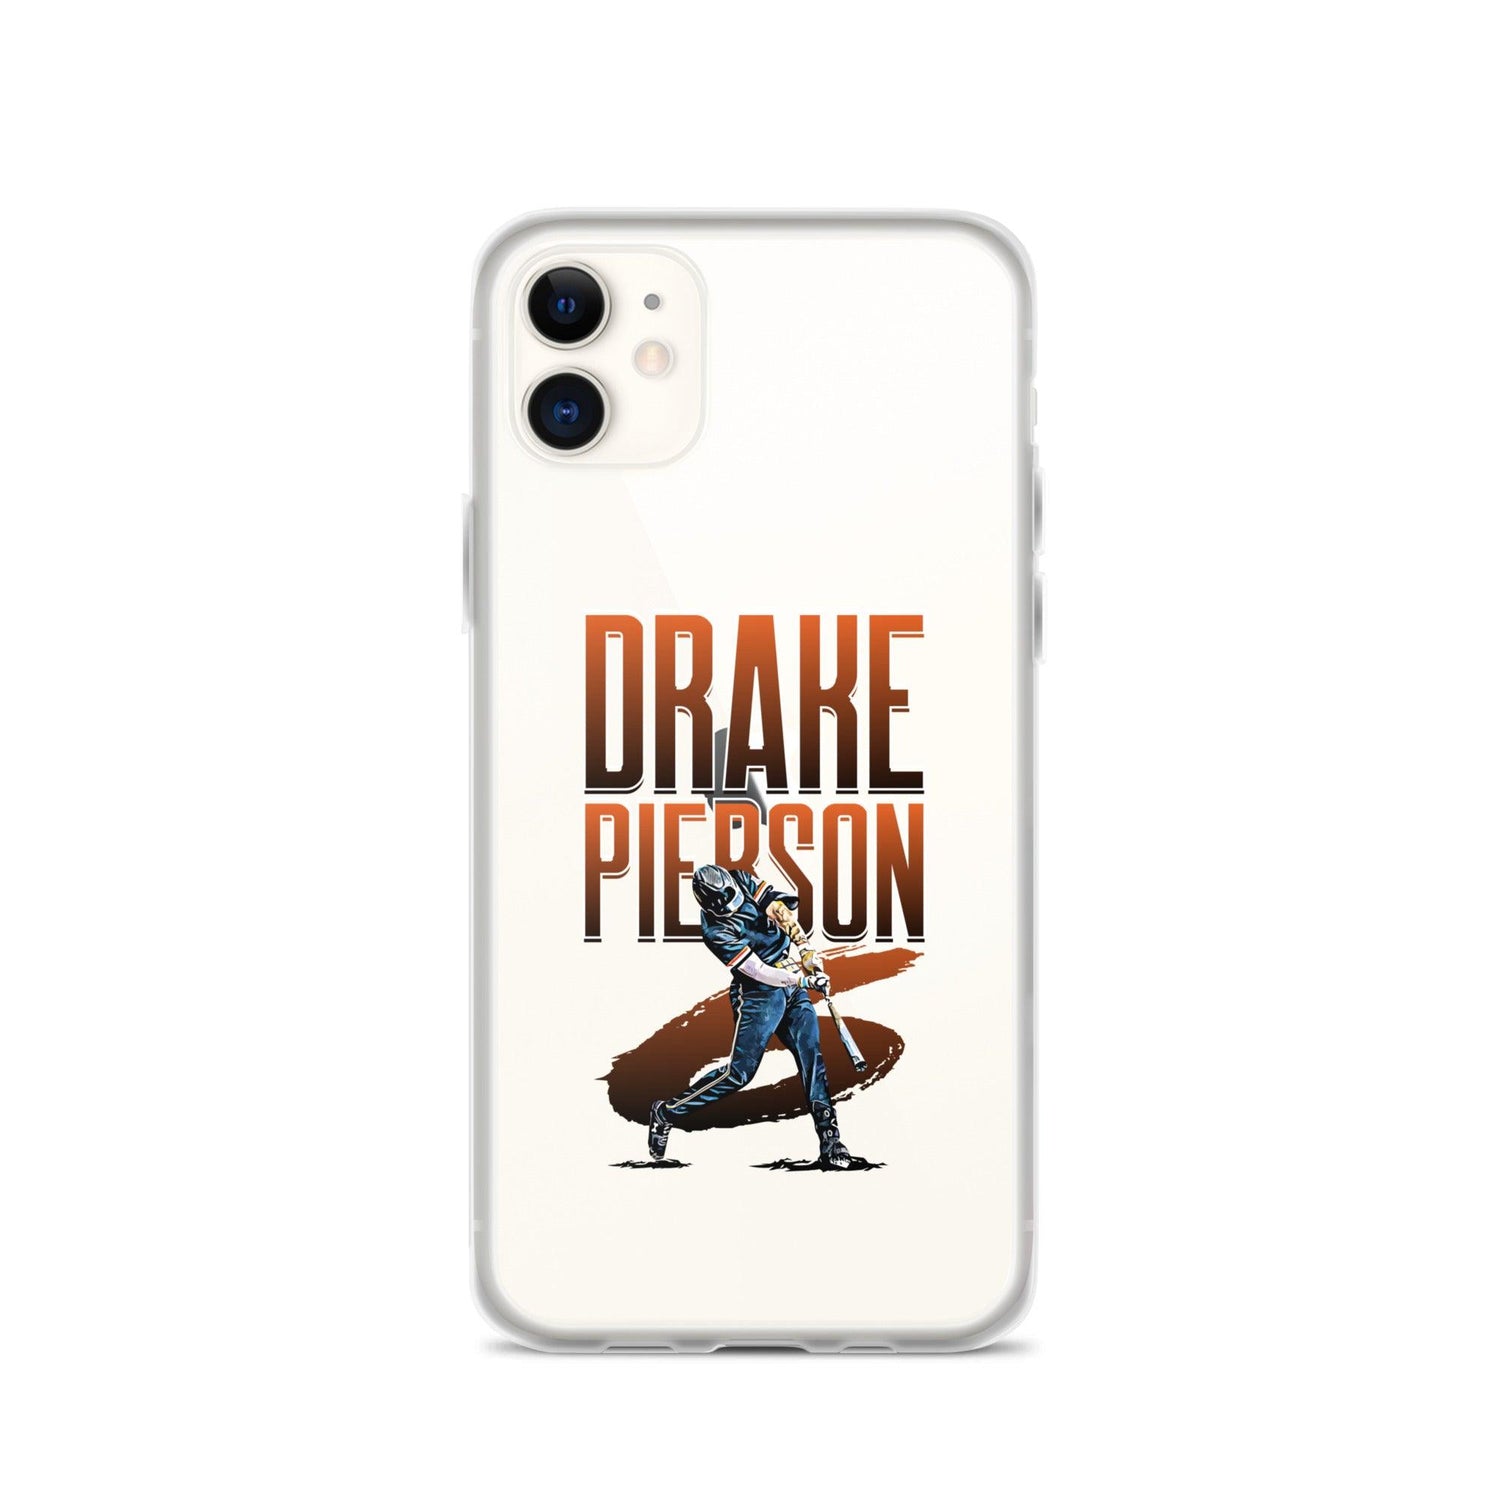 Drake Pierson "Gametime" iPhone Case - Fan Arch